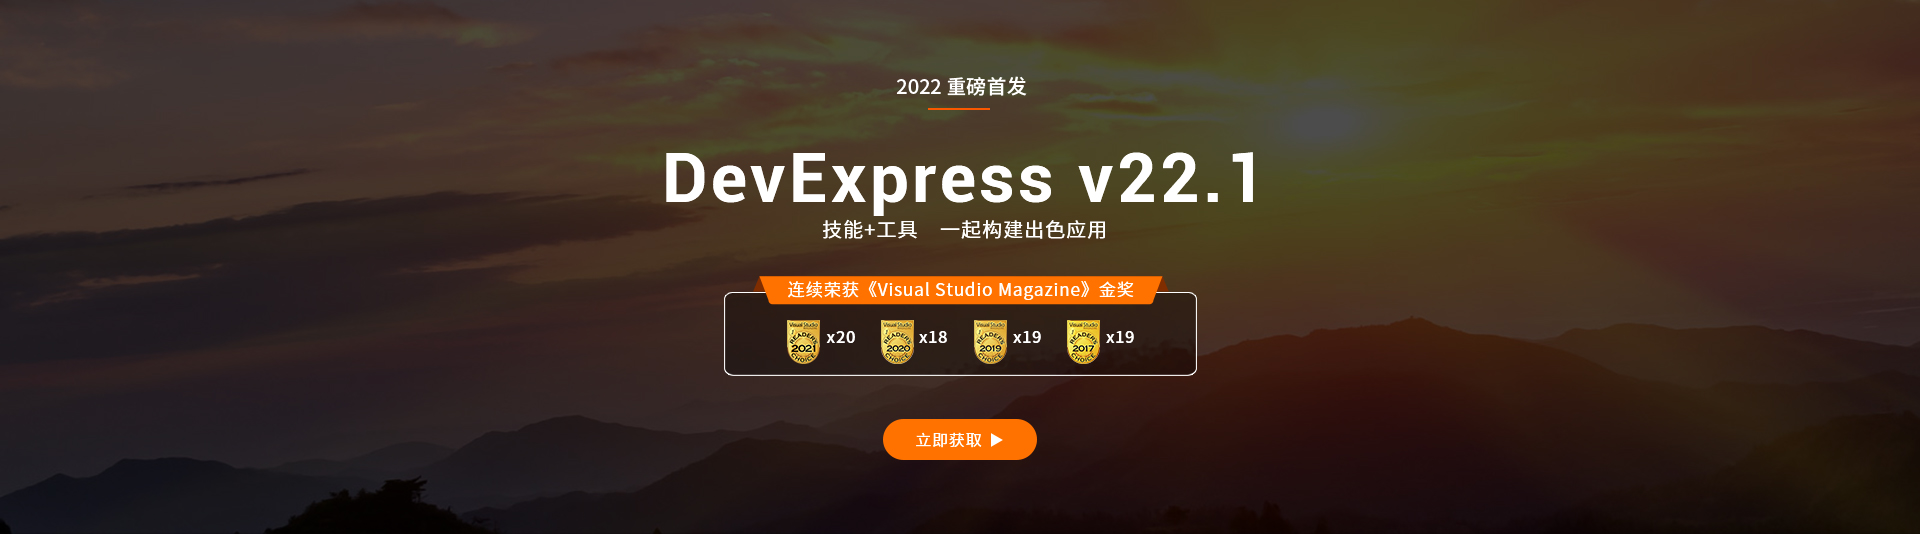 DevExpress 2022年第一个重大版本——v22.1全新发布！